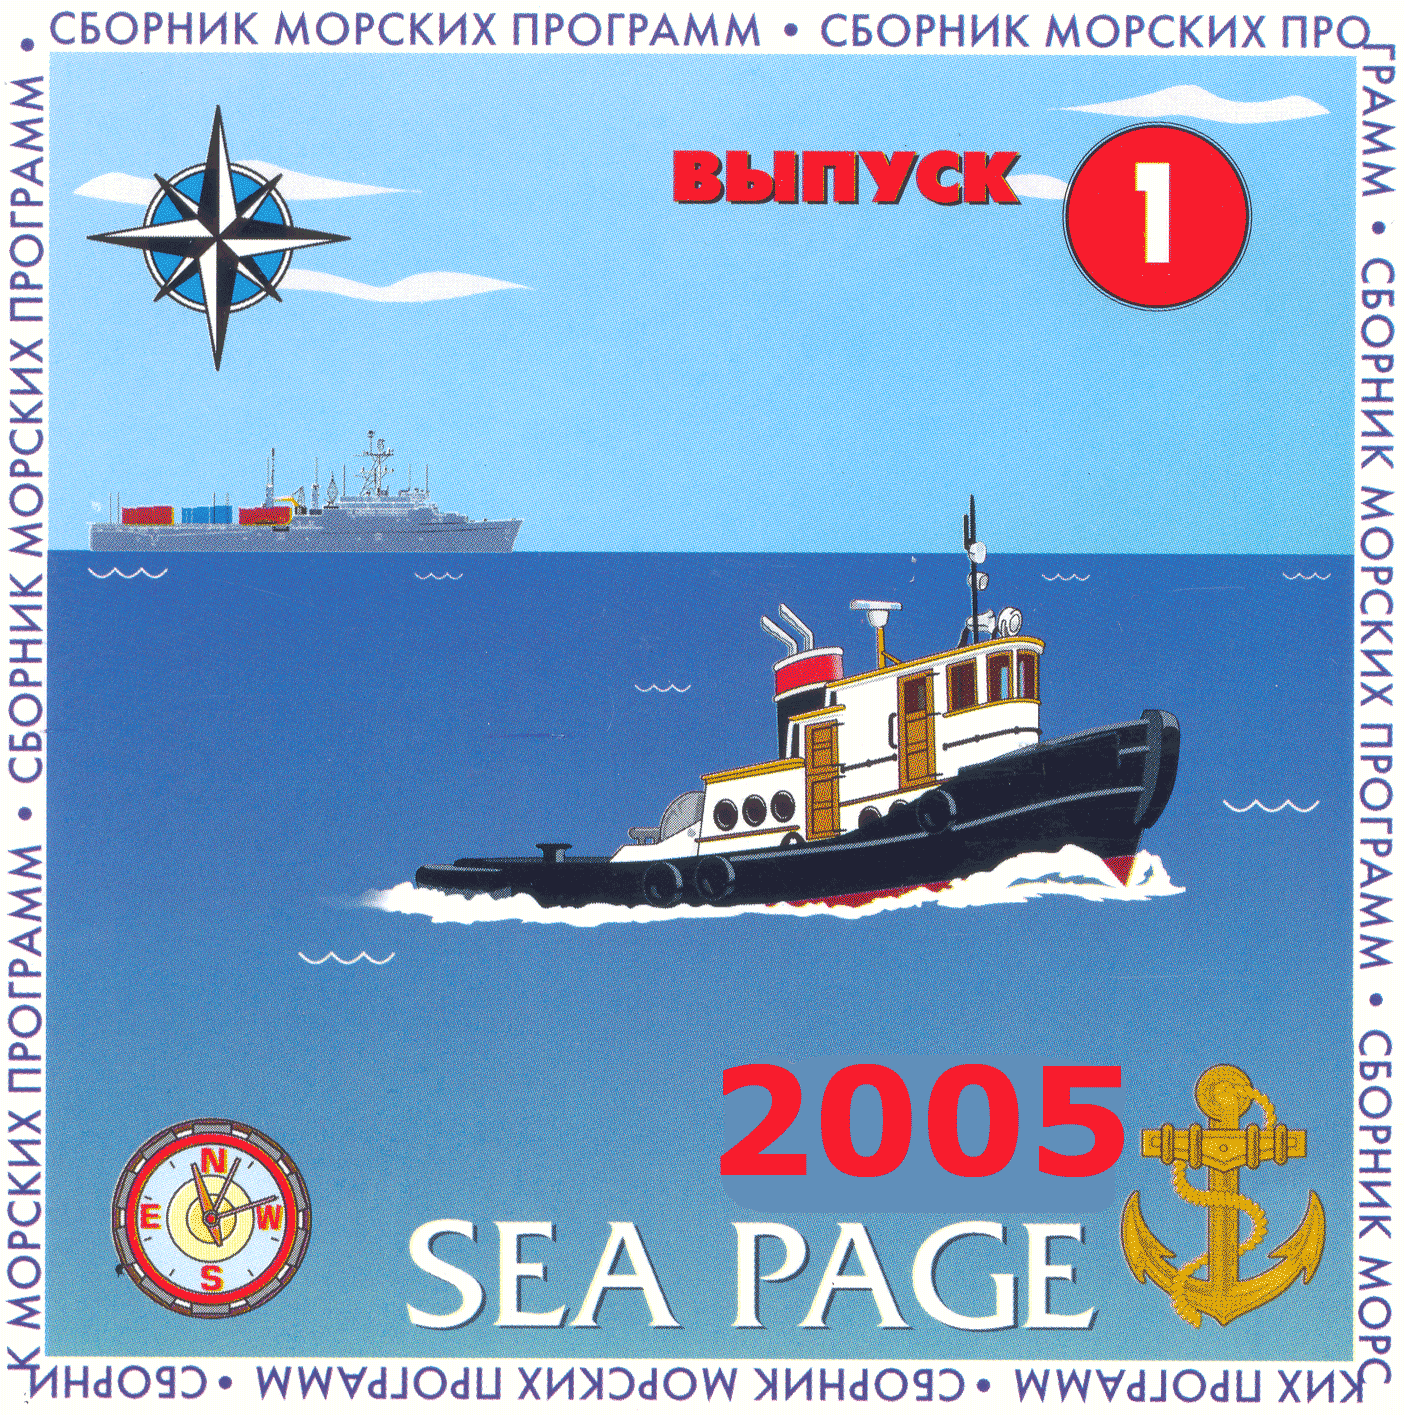 Сборник морских программ "Sea Page 1"